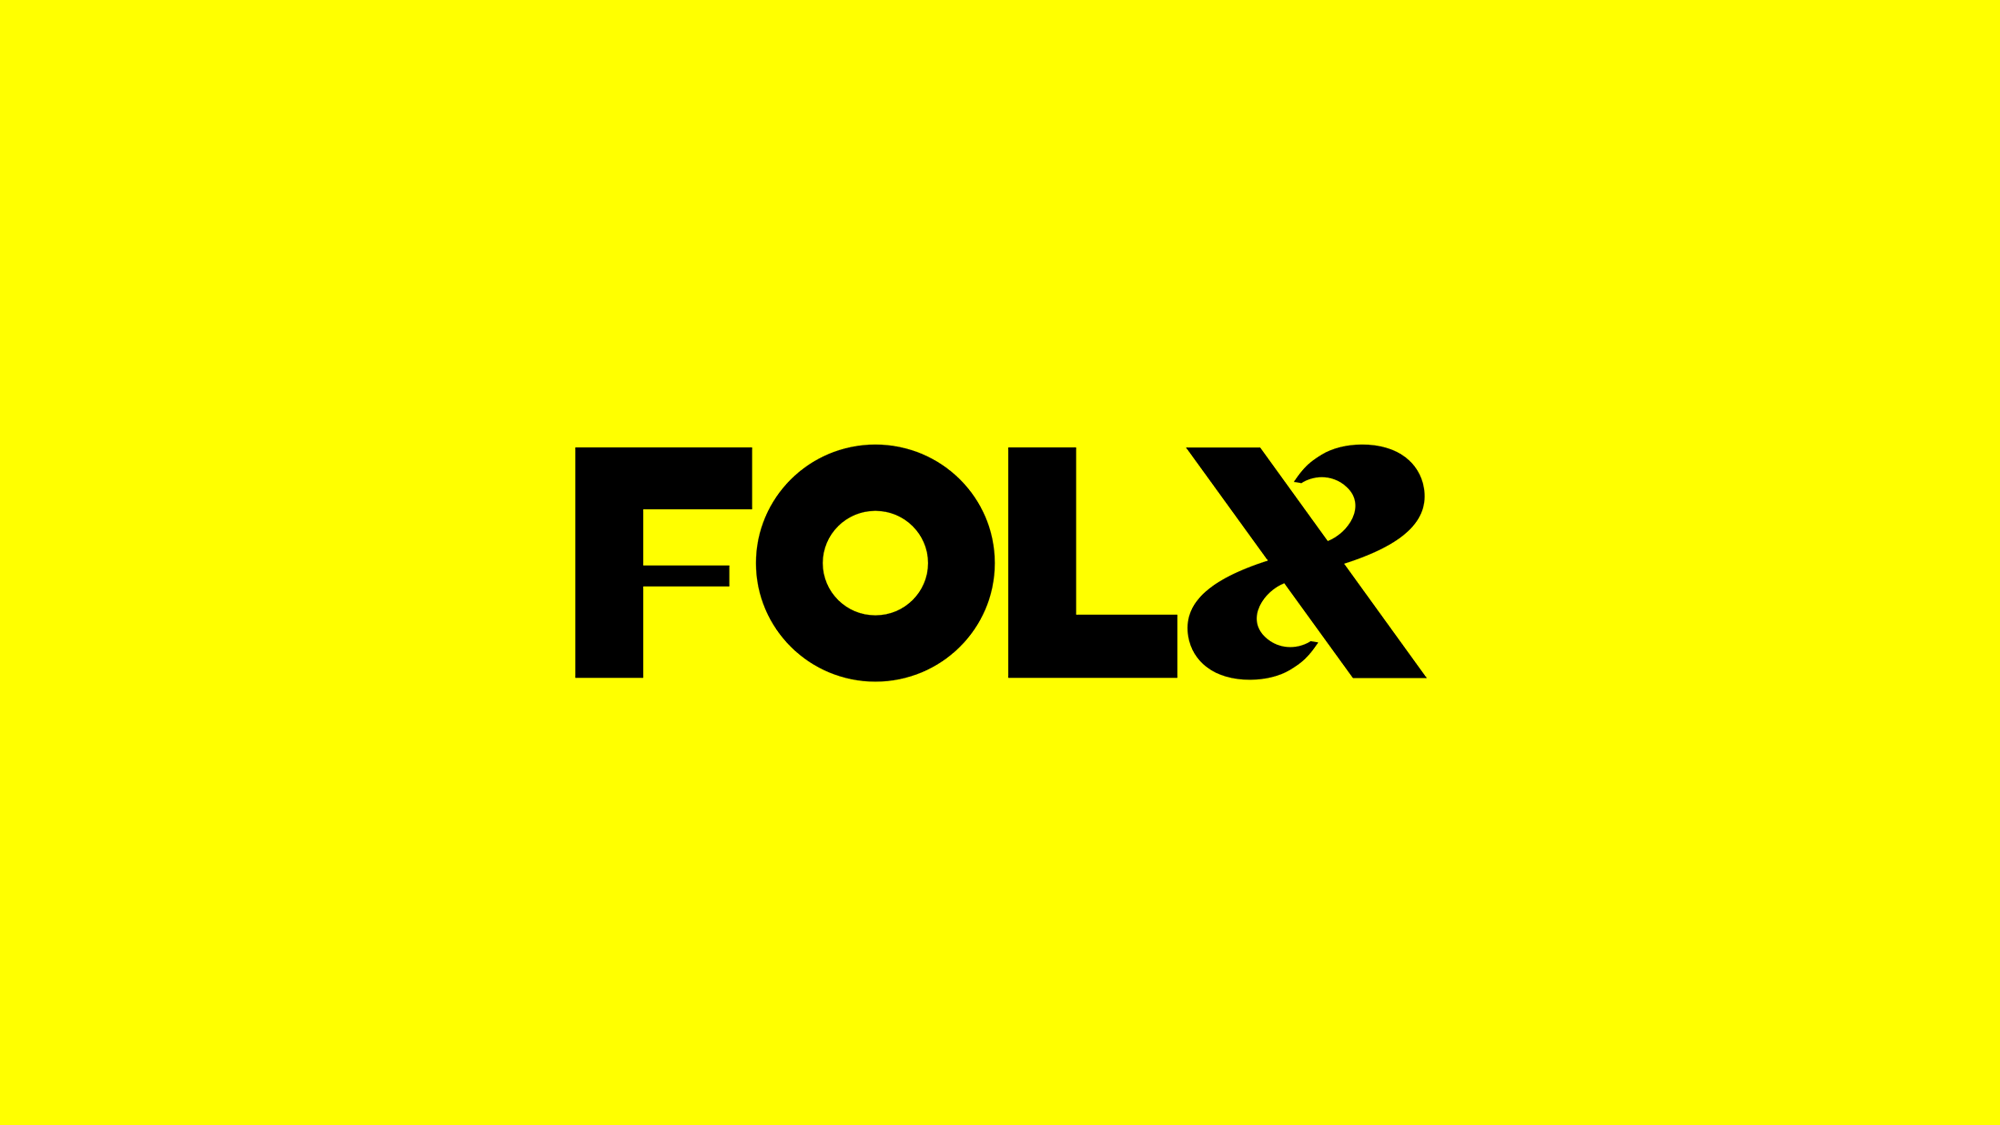 folx trans health